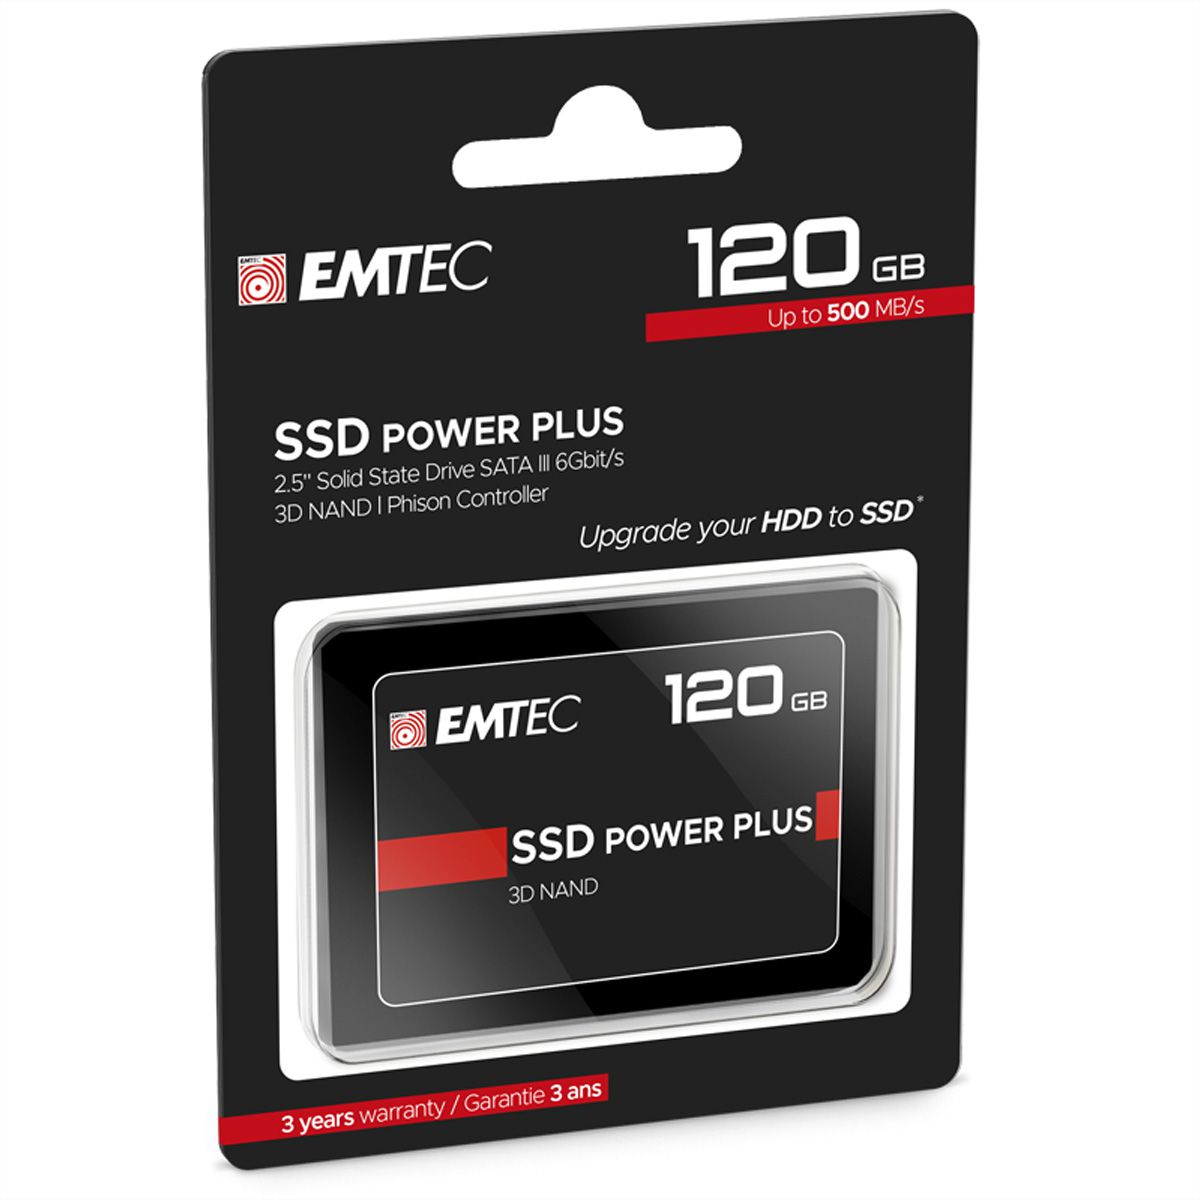 EMTEC SSD interne X150 120GB, SSD Power Plus, 2.5, SATA III 6GB/s - SECOMP  France